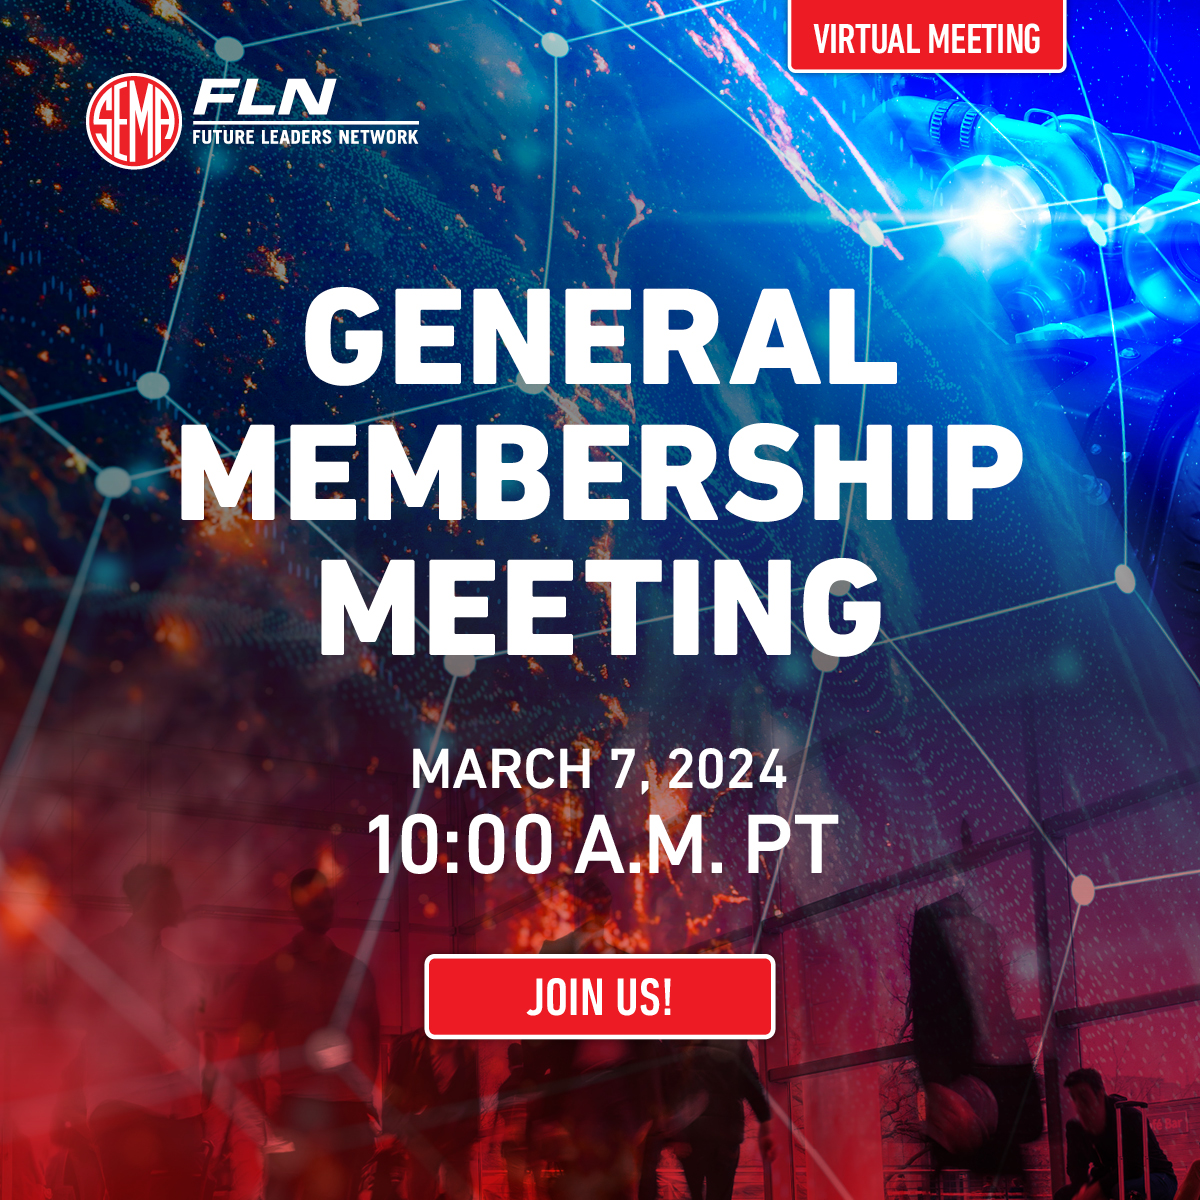 Register Now for FLN’s General Membership Meeting